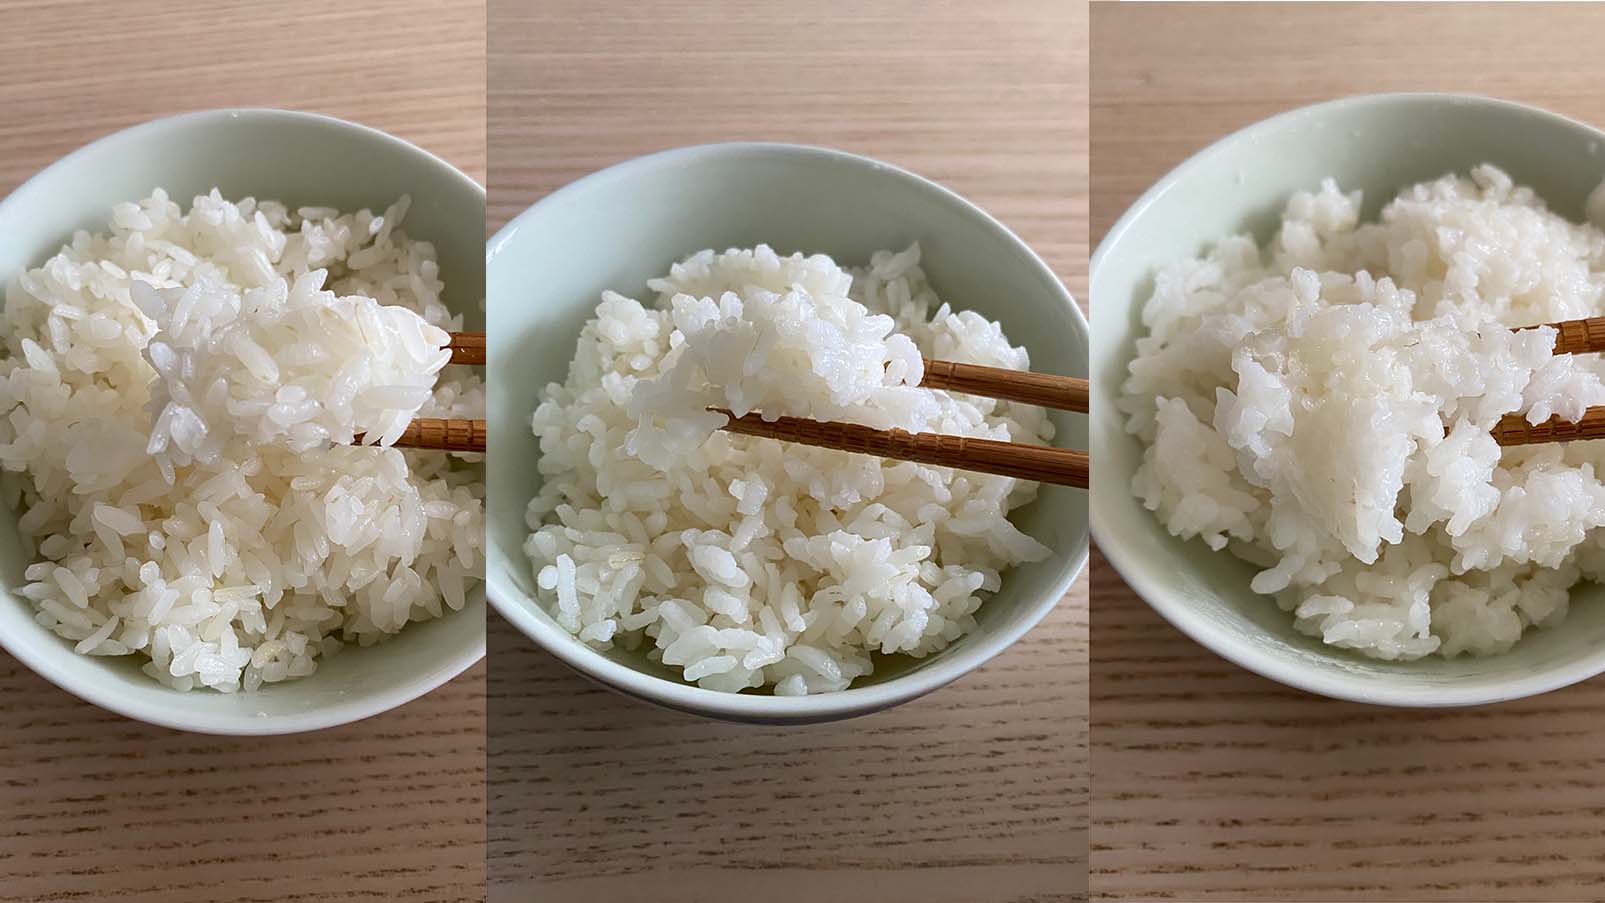 https://media.cnn.com/api/v1/images/stellar/prod/220511122337-zojirushi-neuro-fuzzy-rice-cooker-review-rice-comparison.jpg?c=original